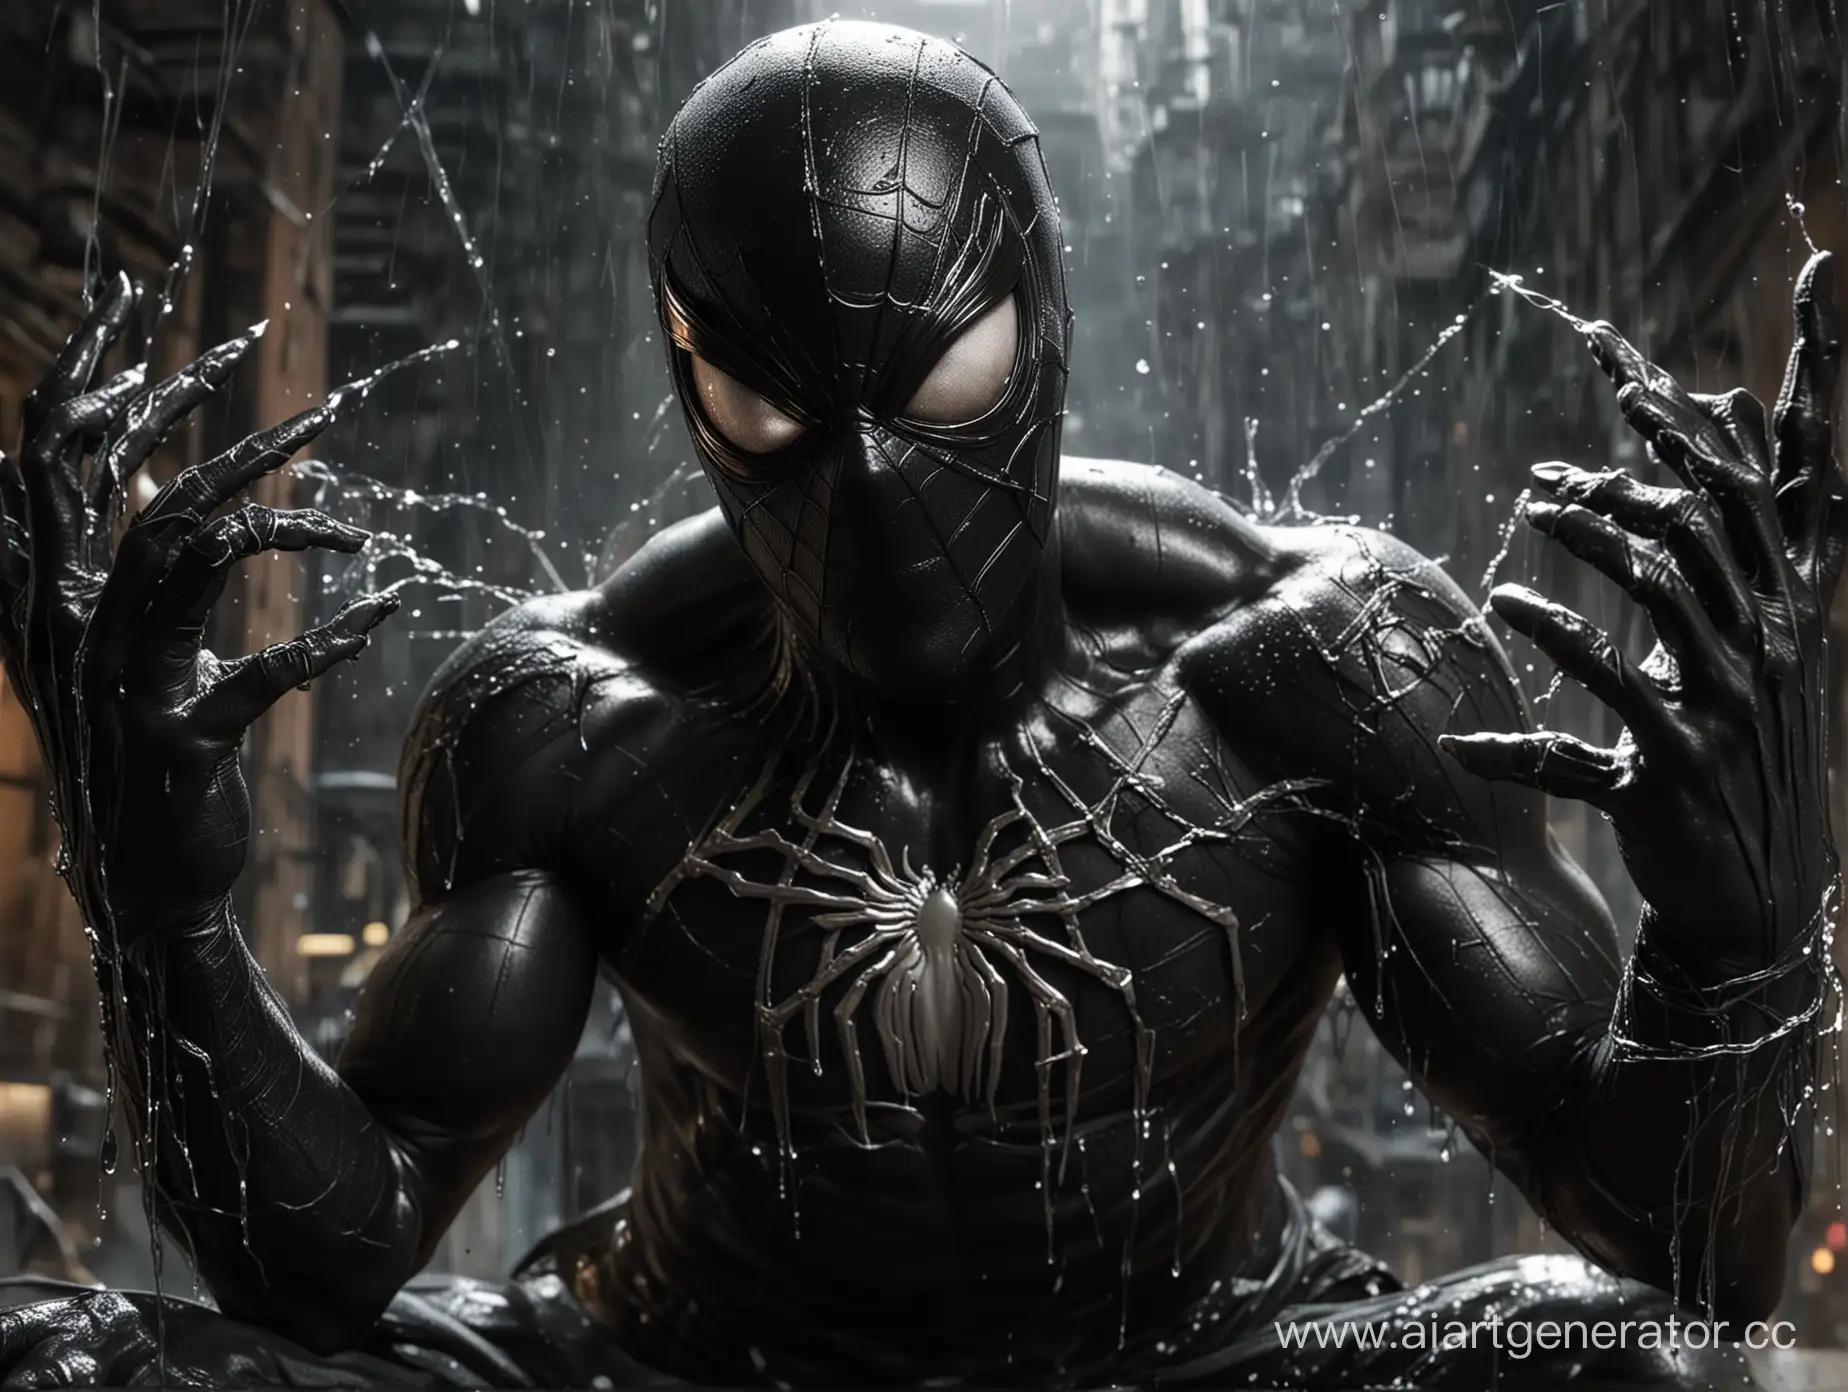 Malevolent-Black-SpiderMan-Overlord-Manipulating-Black-Liquid-Threads